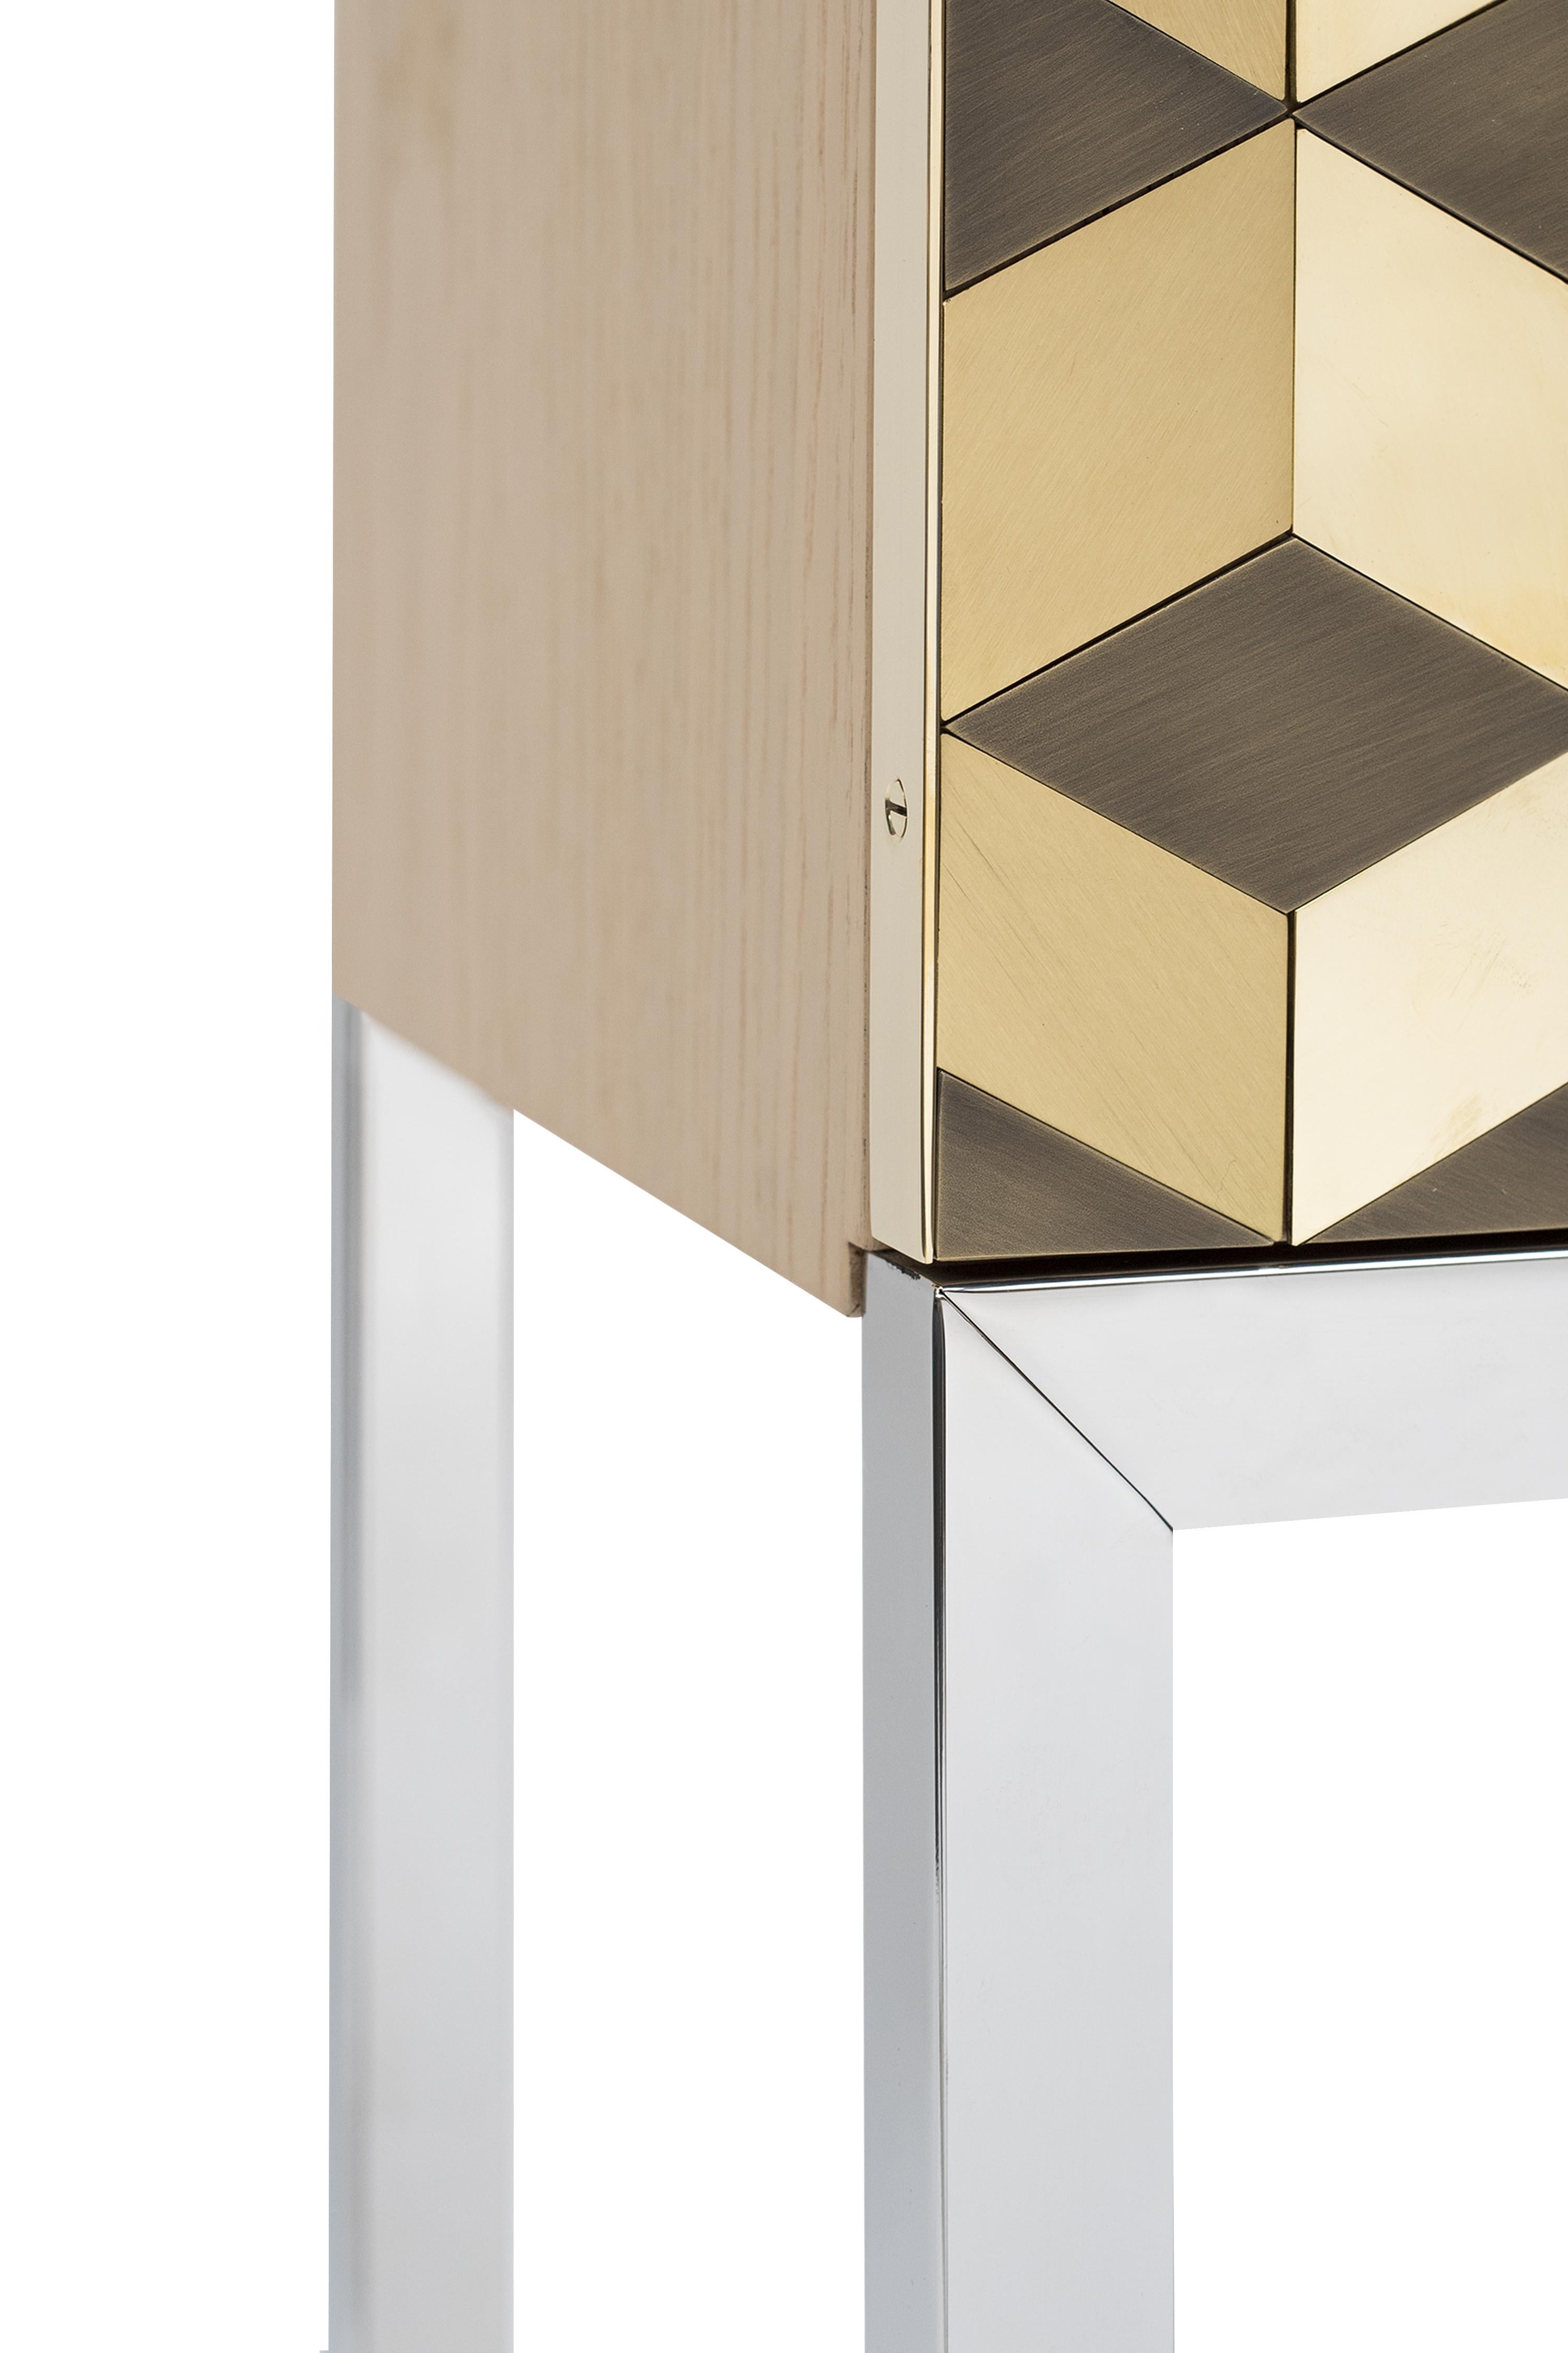 Dutch 21st Century Art Deco Style 'Rachel' CO3L Tiled Cabinet in Brass and Steel